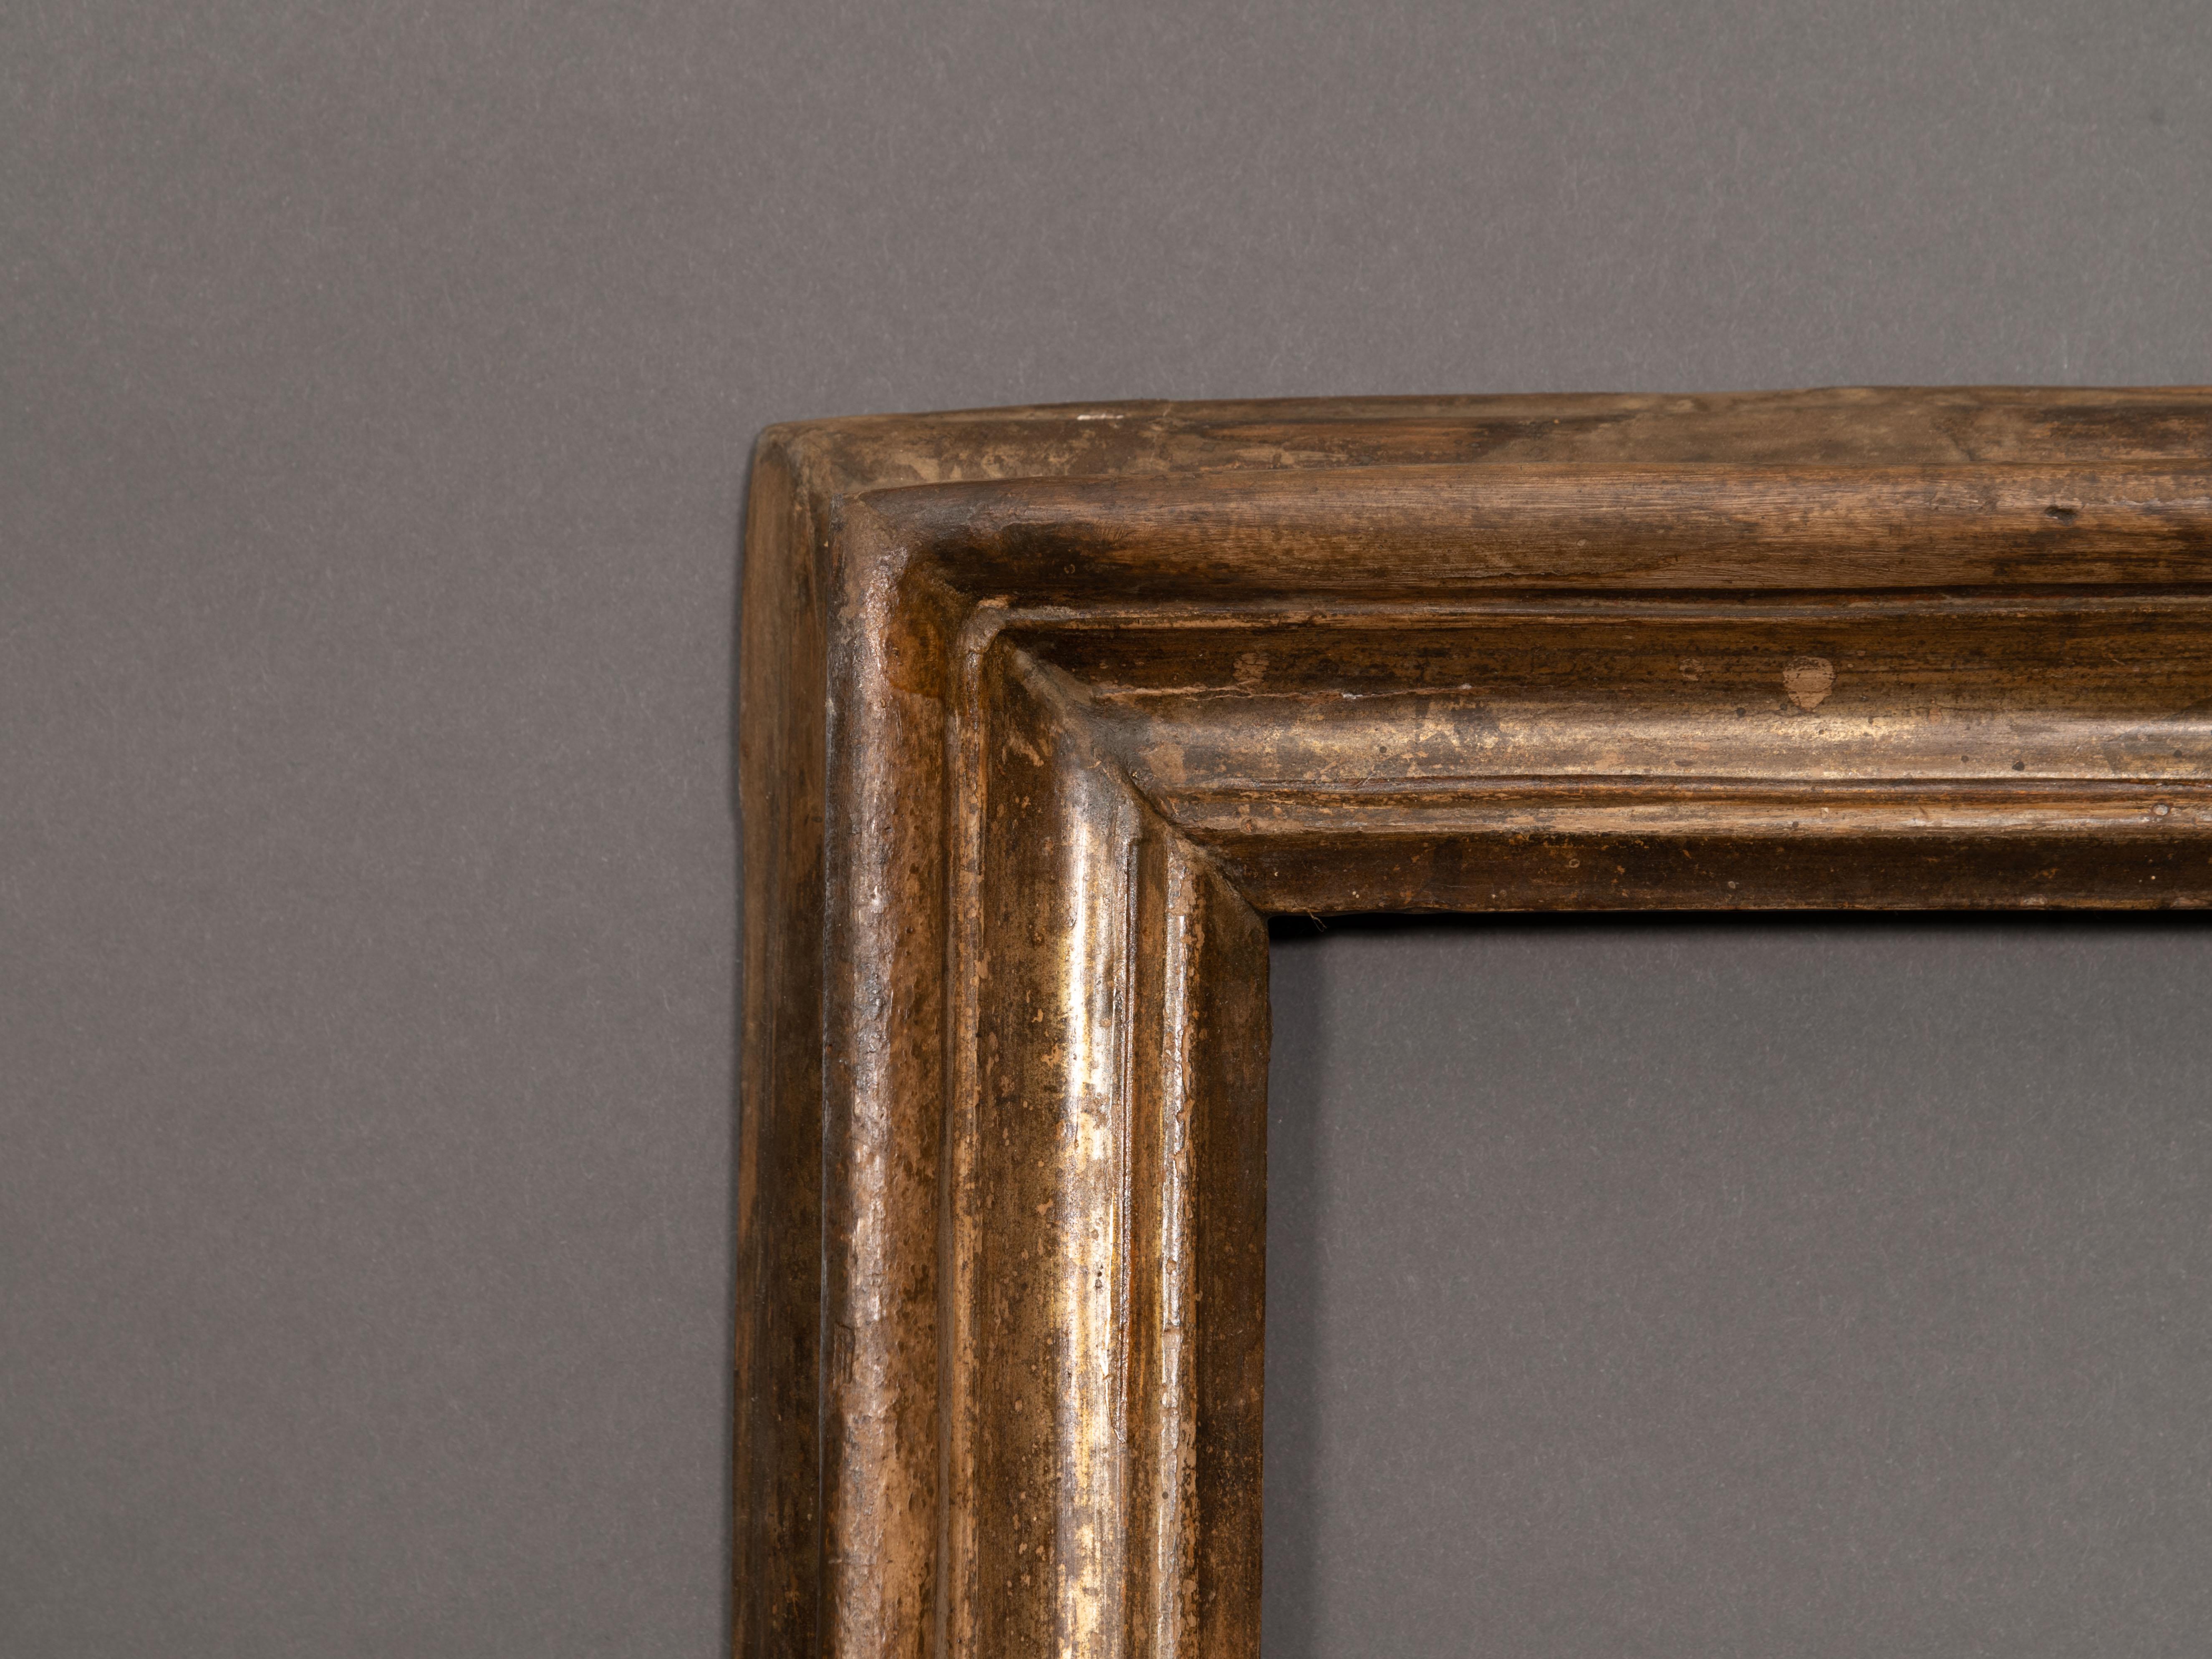 Salvator Rosa last 17th century “Mecca” giltwood frame.
Internal measurements cm 54.5 x 65.

Pure example of Italian Salvator Rosa gild wood frame of 17th century.
